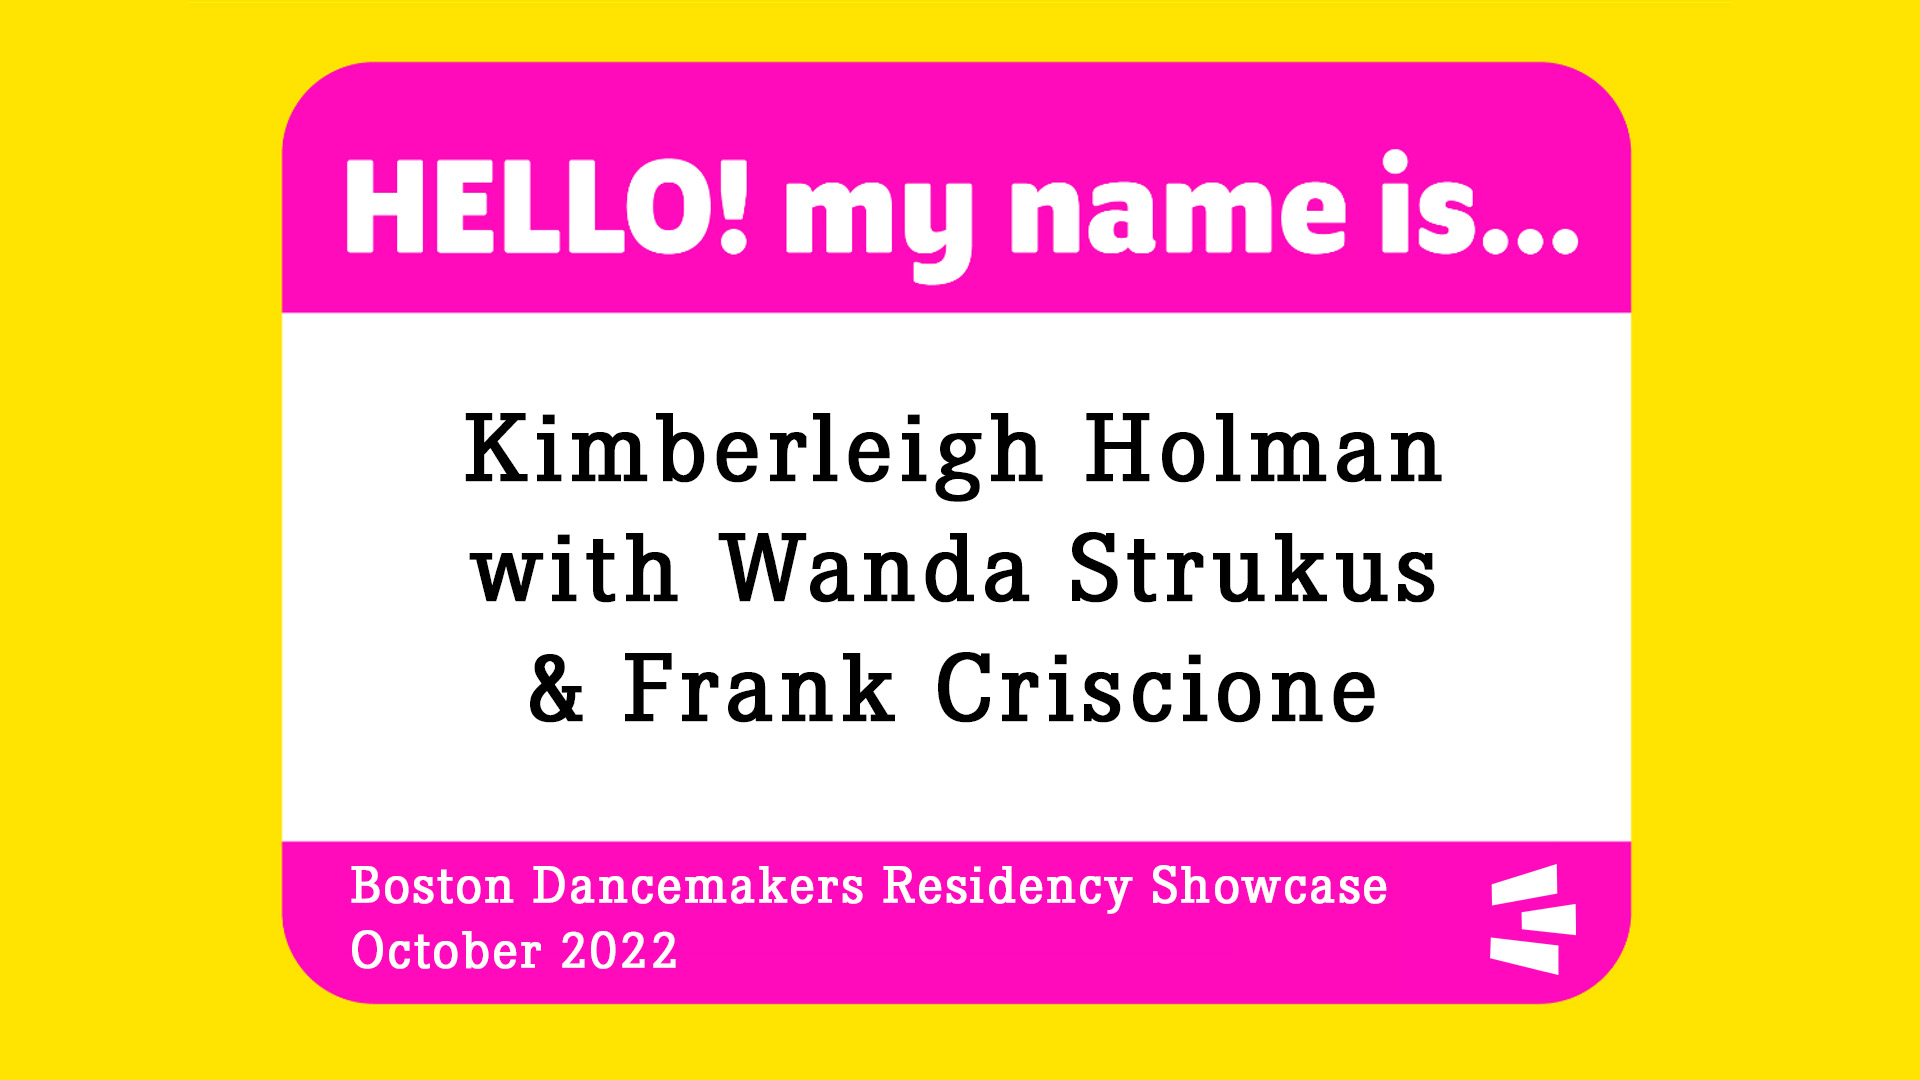 Hello My Name Is... Kimberleigh A. Holman - Boston Center for the Arts